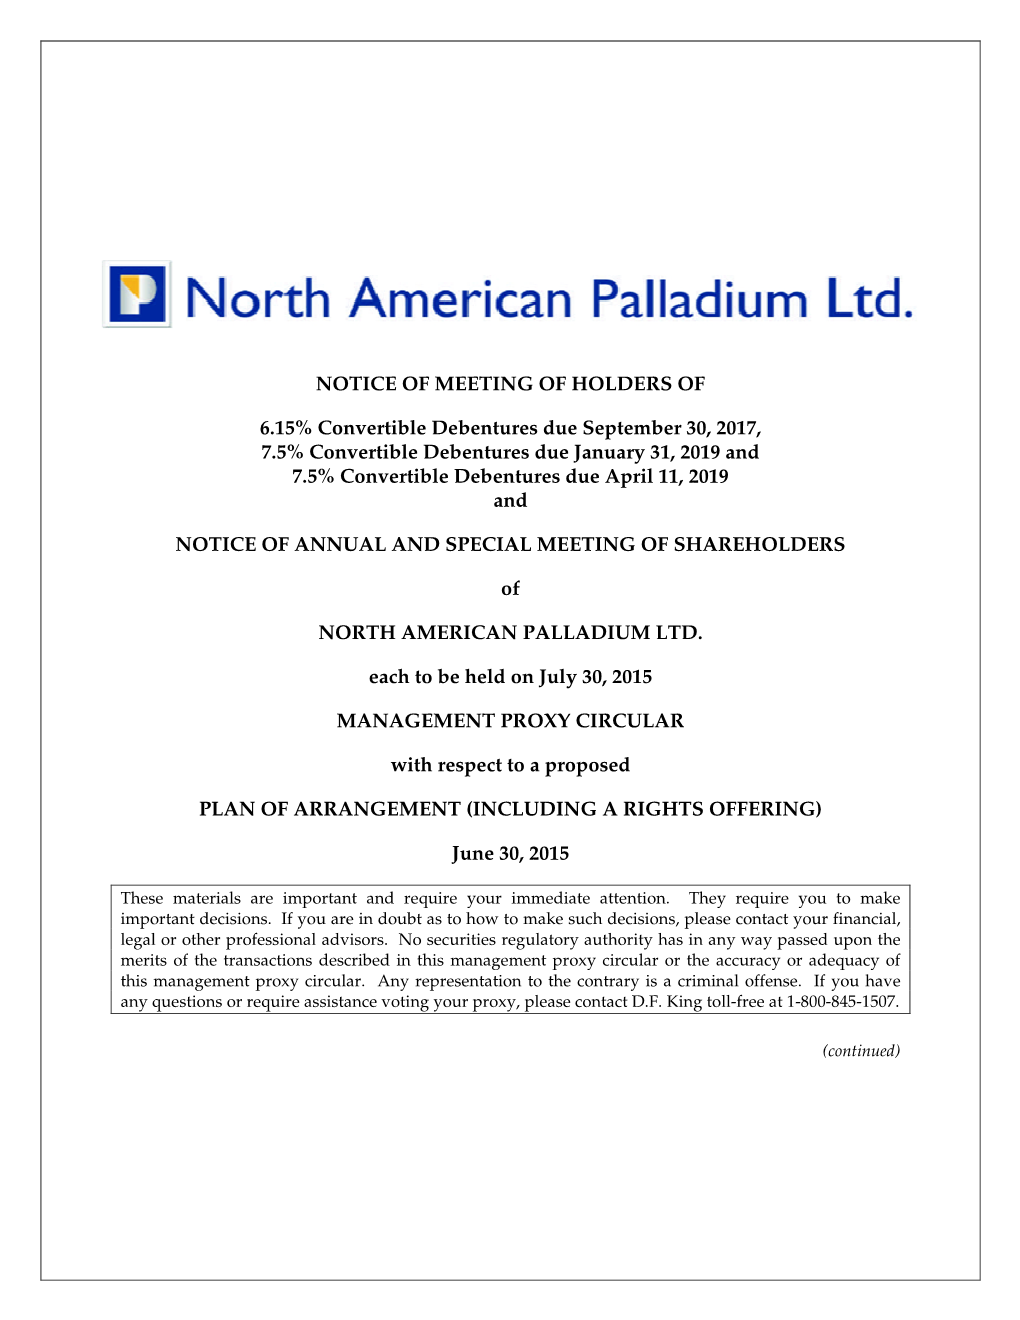 Circular for Recapitalization of North American Palladium Ltd